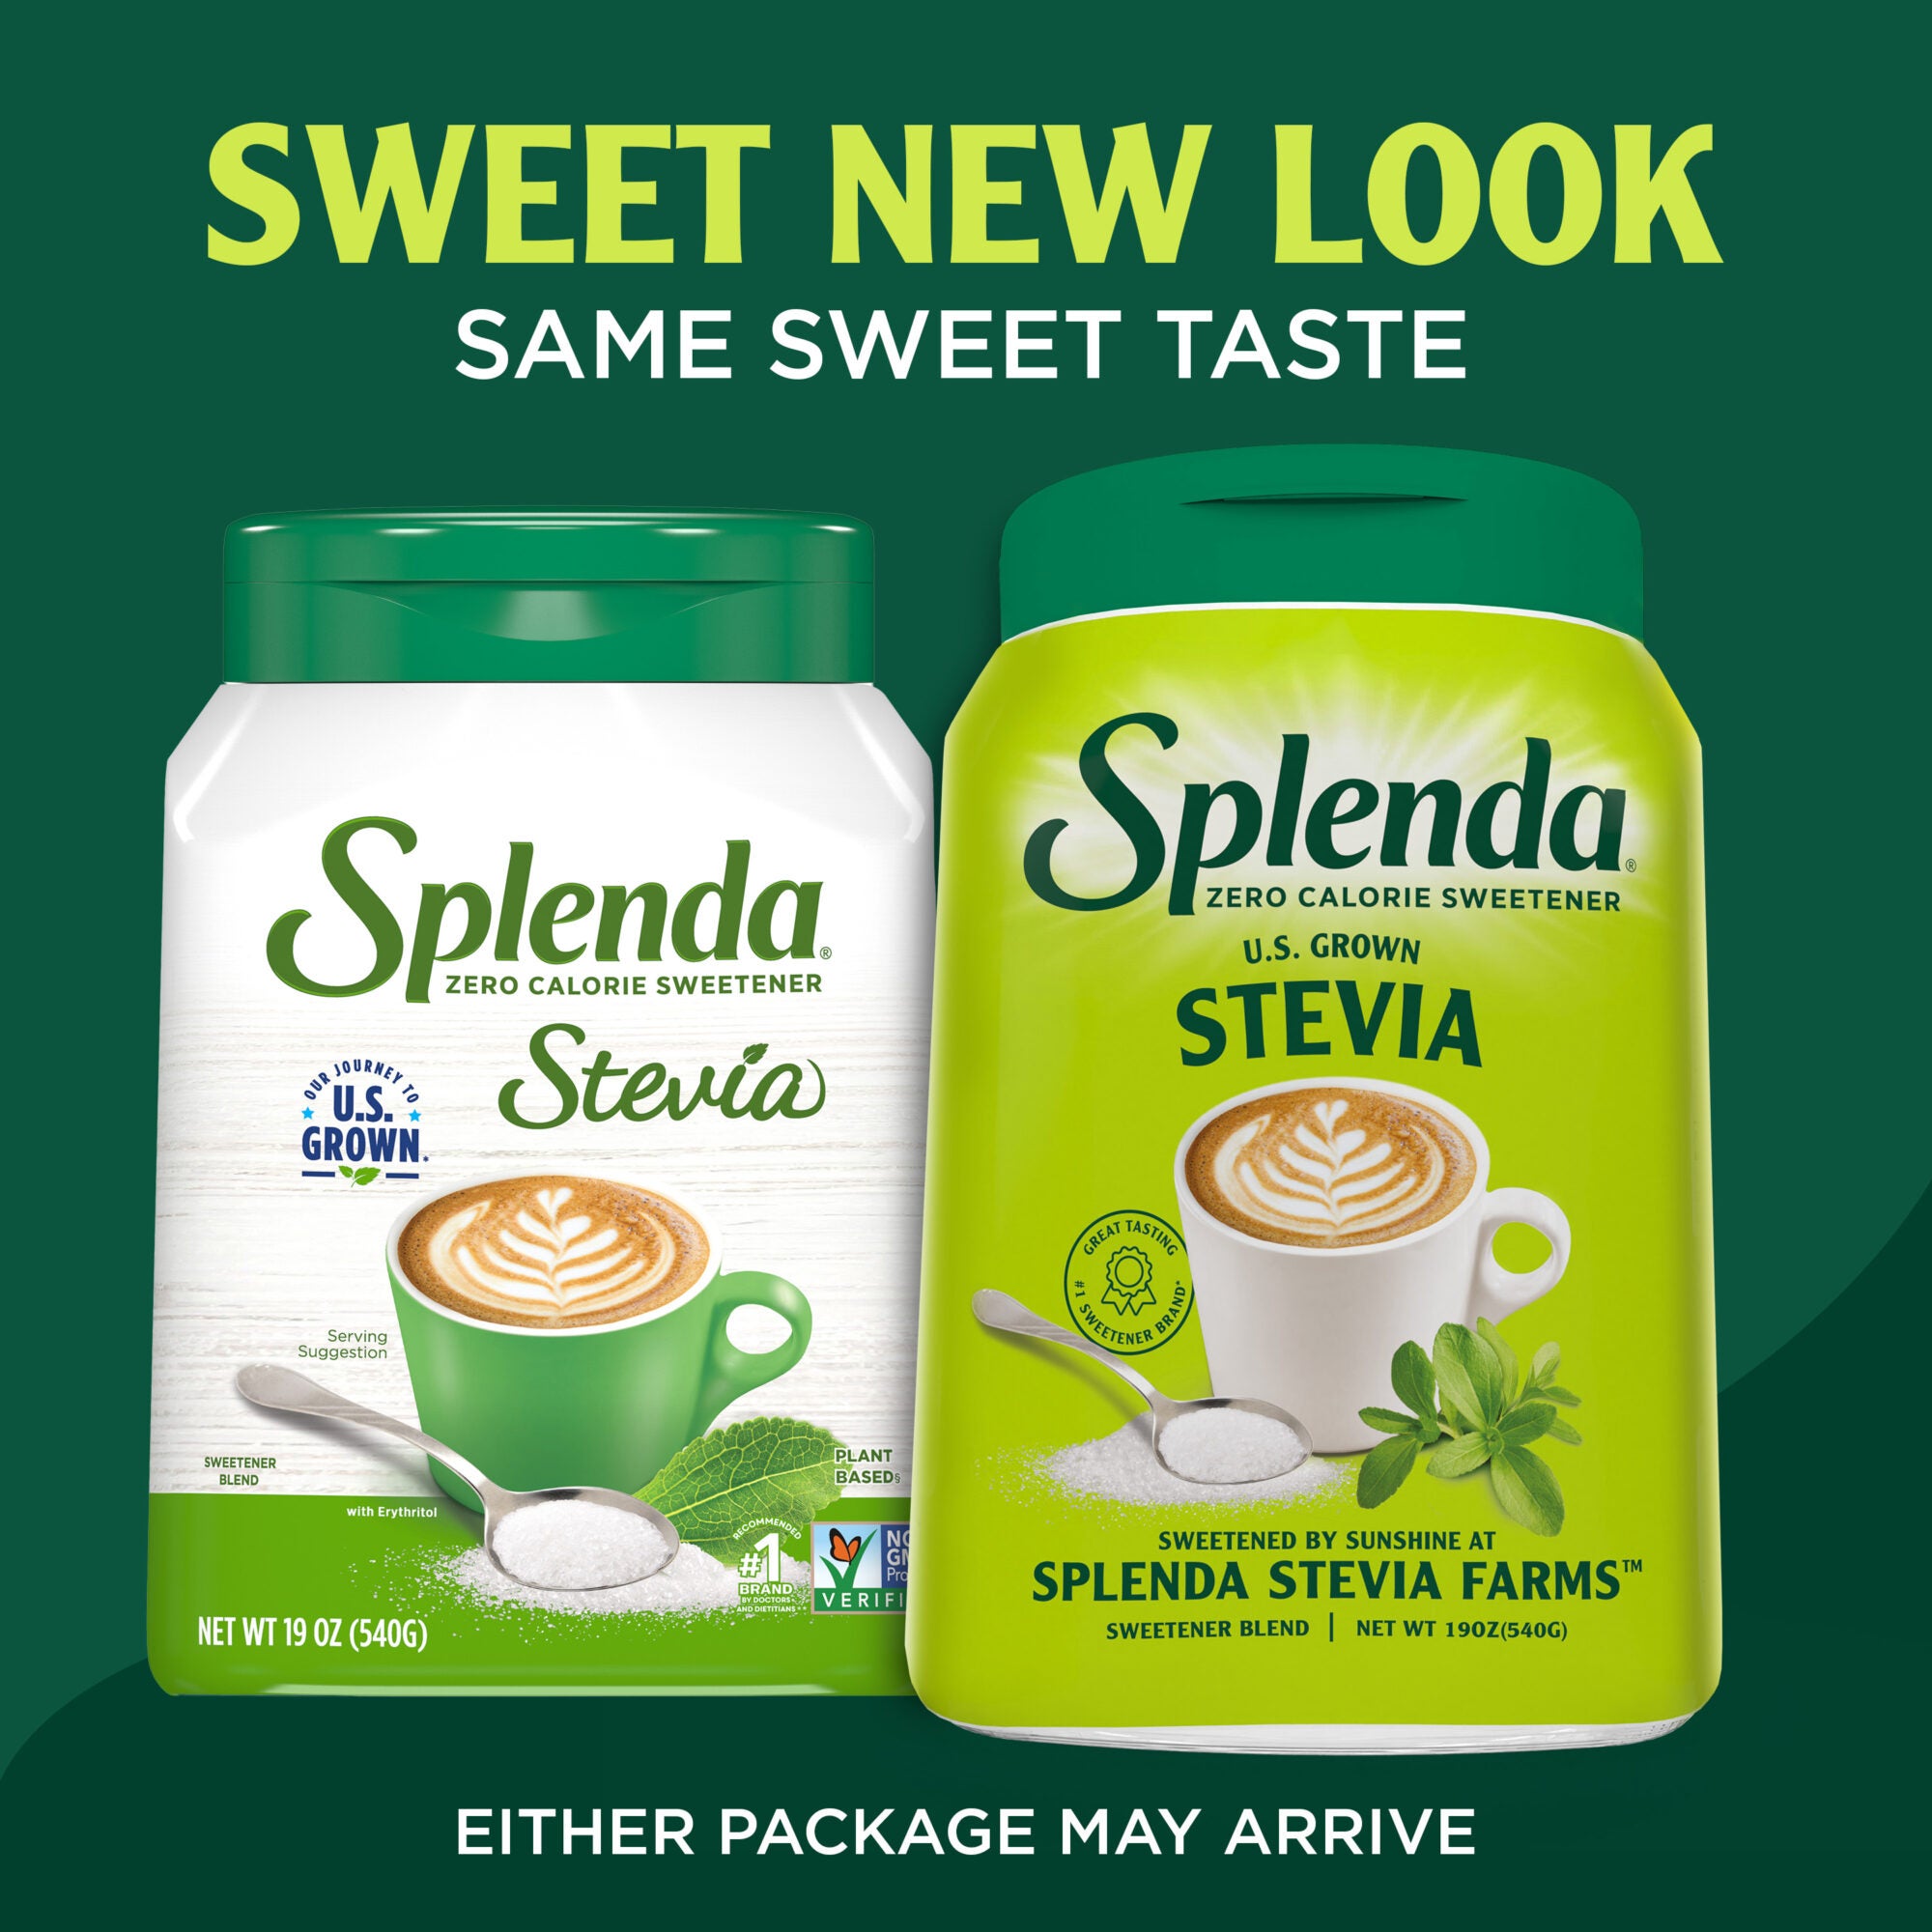 Splenda U.S. Grown Stevia Large Jar - Same Sweet Taste